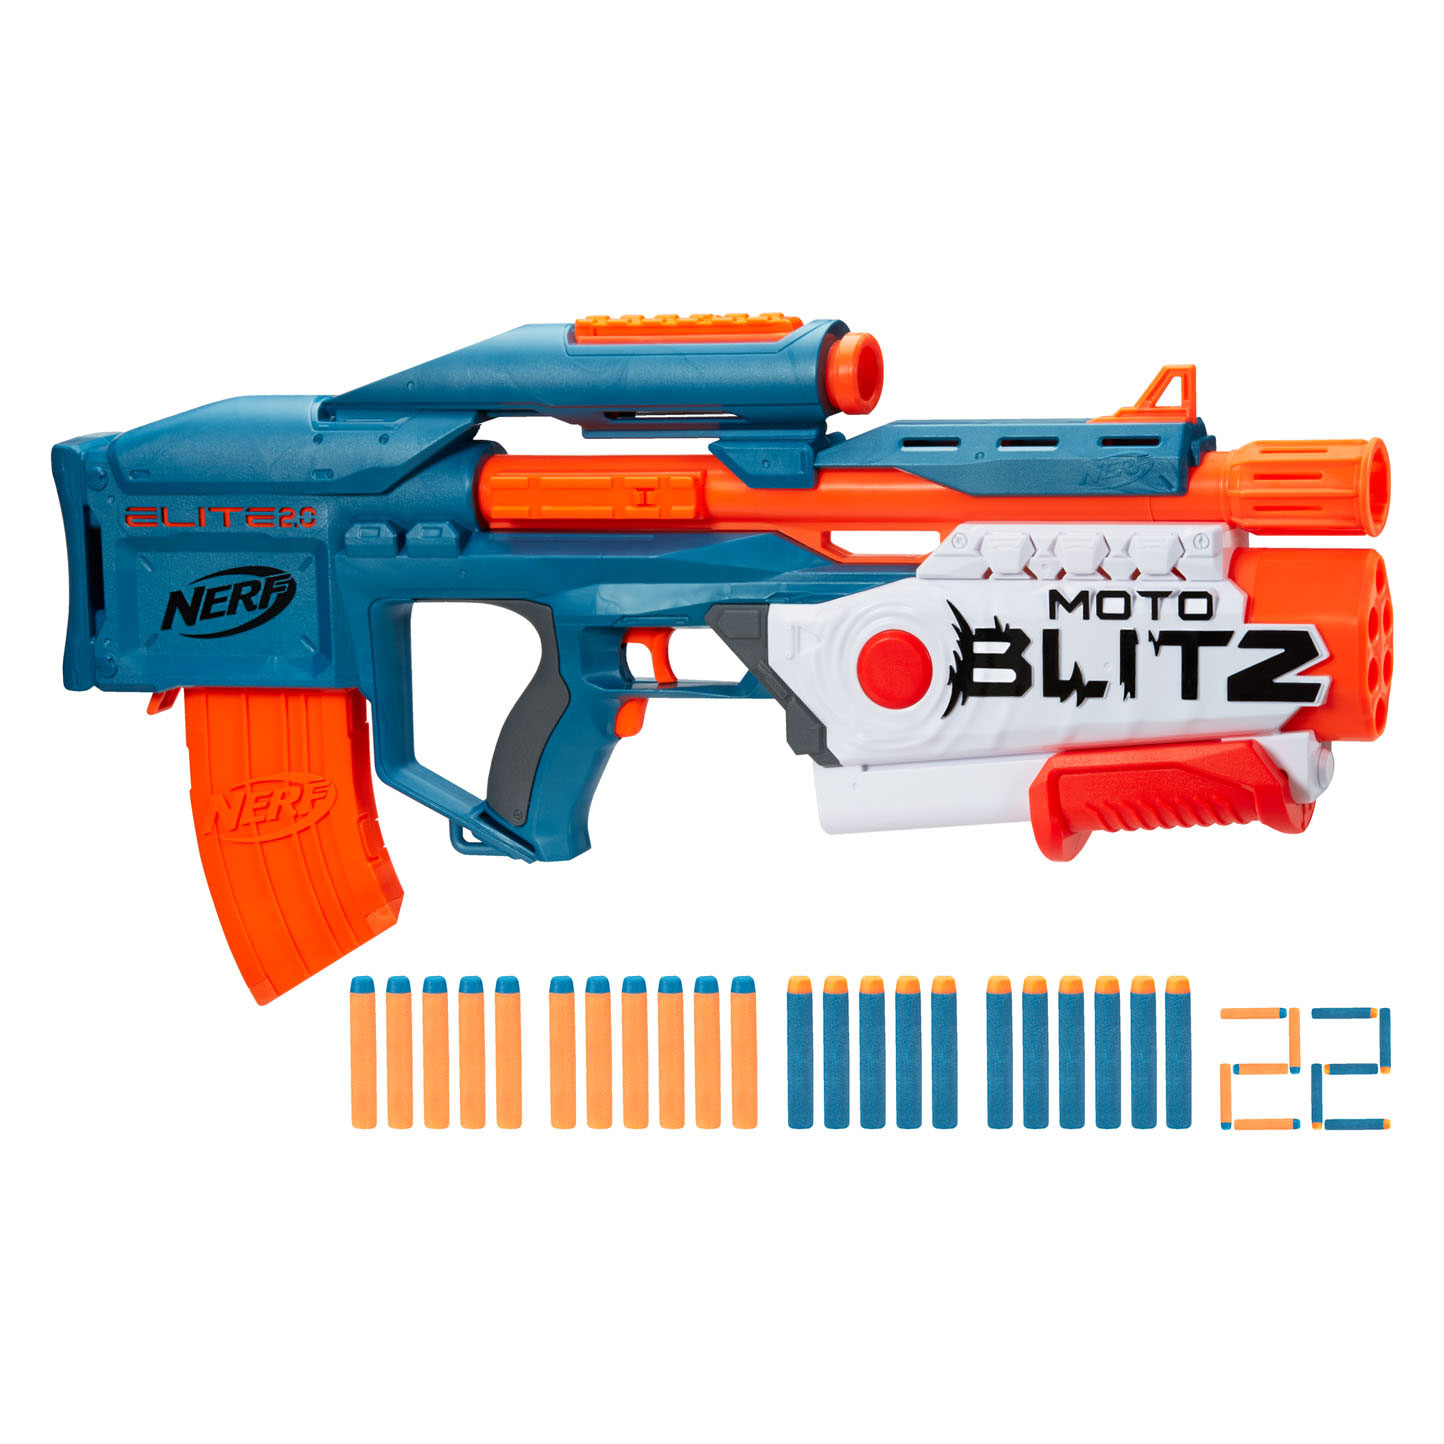 Nerf Elite 2.0 Motoblitz CS10